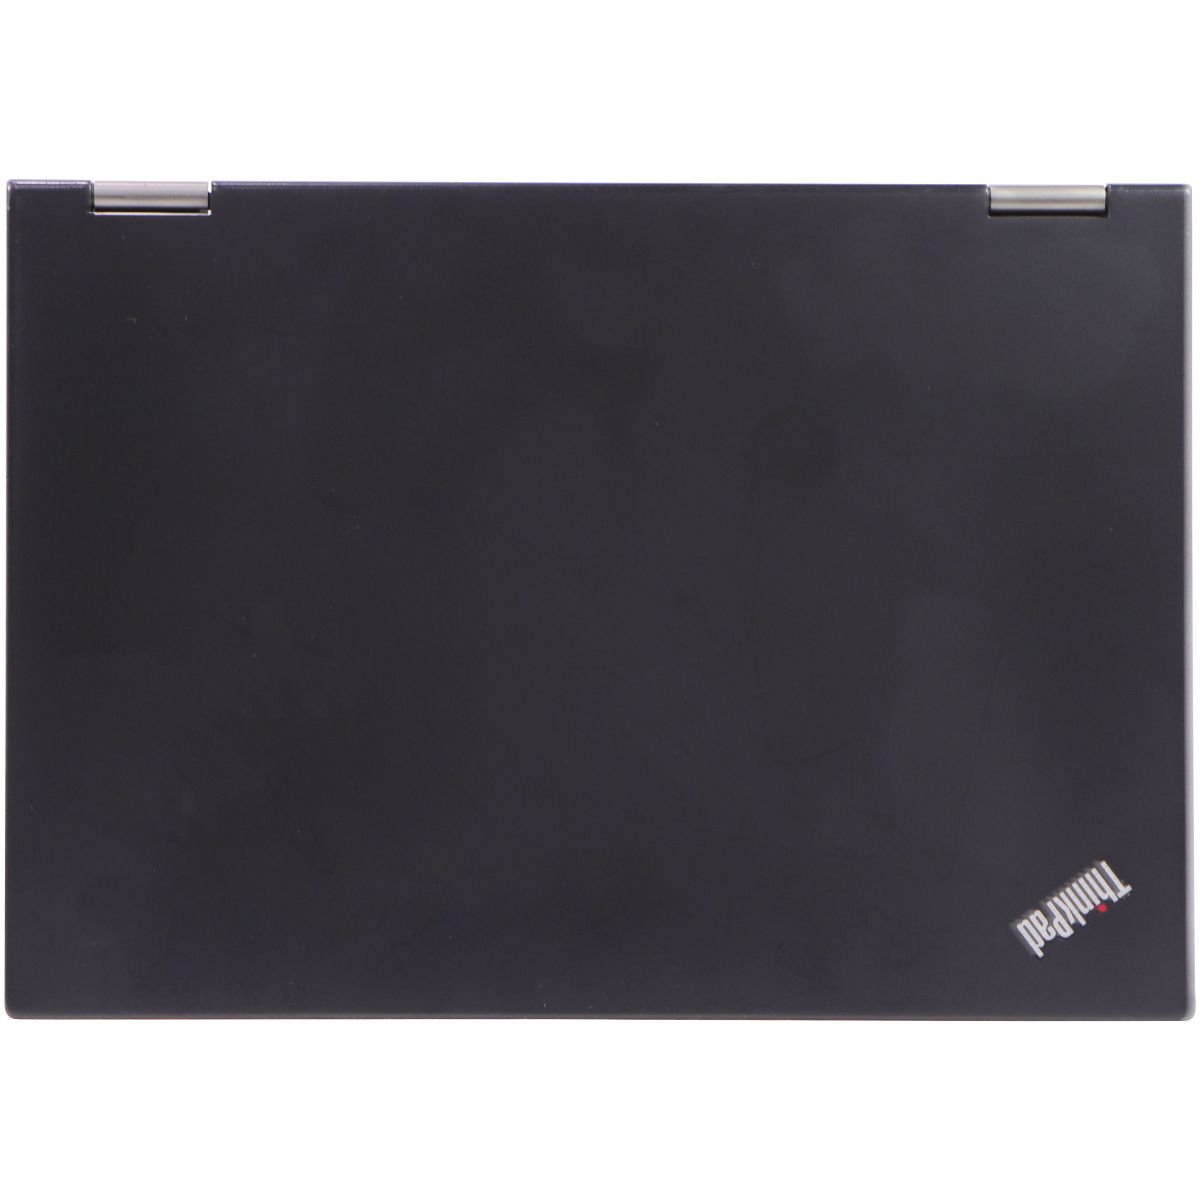 Lenovo ThinkPad X380 (13.3-in) FHD Touch Laptop (20LH000VUS) i7-8550U/256GB/8GB Laptops - PC Laptops & Netbooks Lenovo    - Simple Cell Bulk Wholesale Pricing - USA Seller